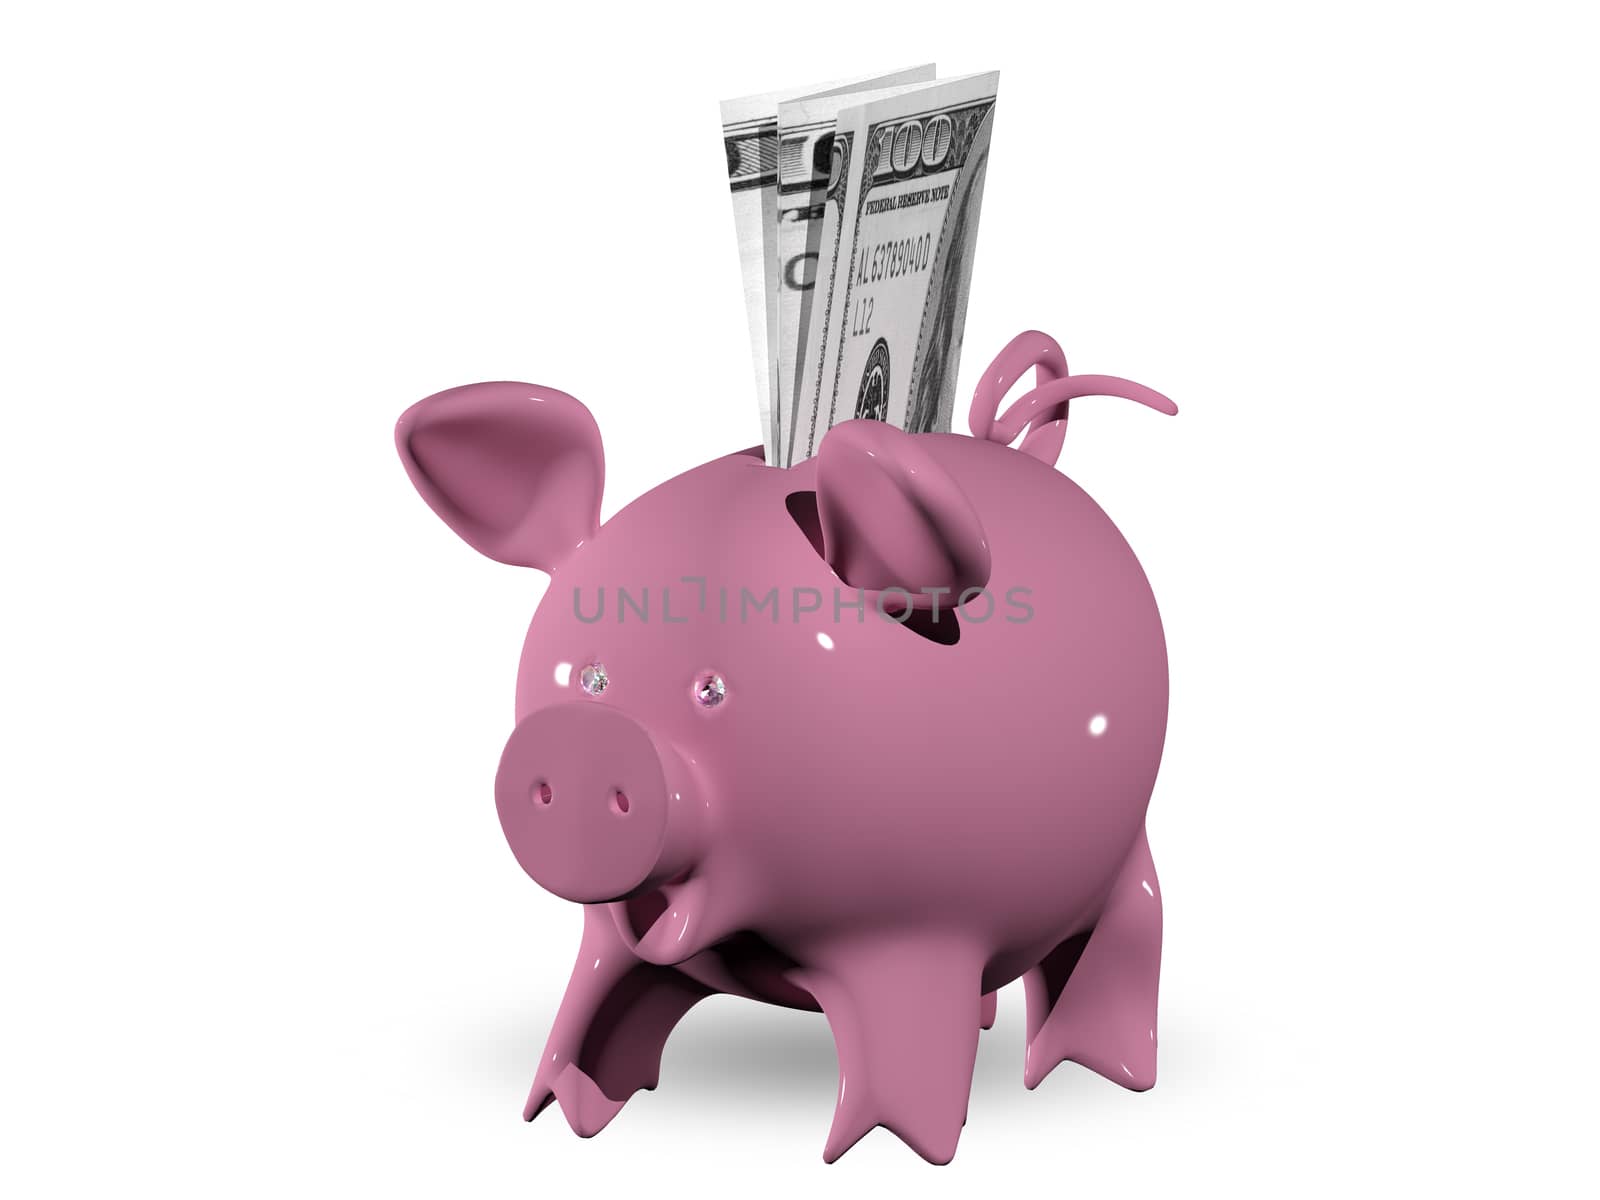 3d illustration of a pink piggy bank